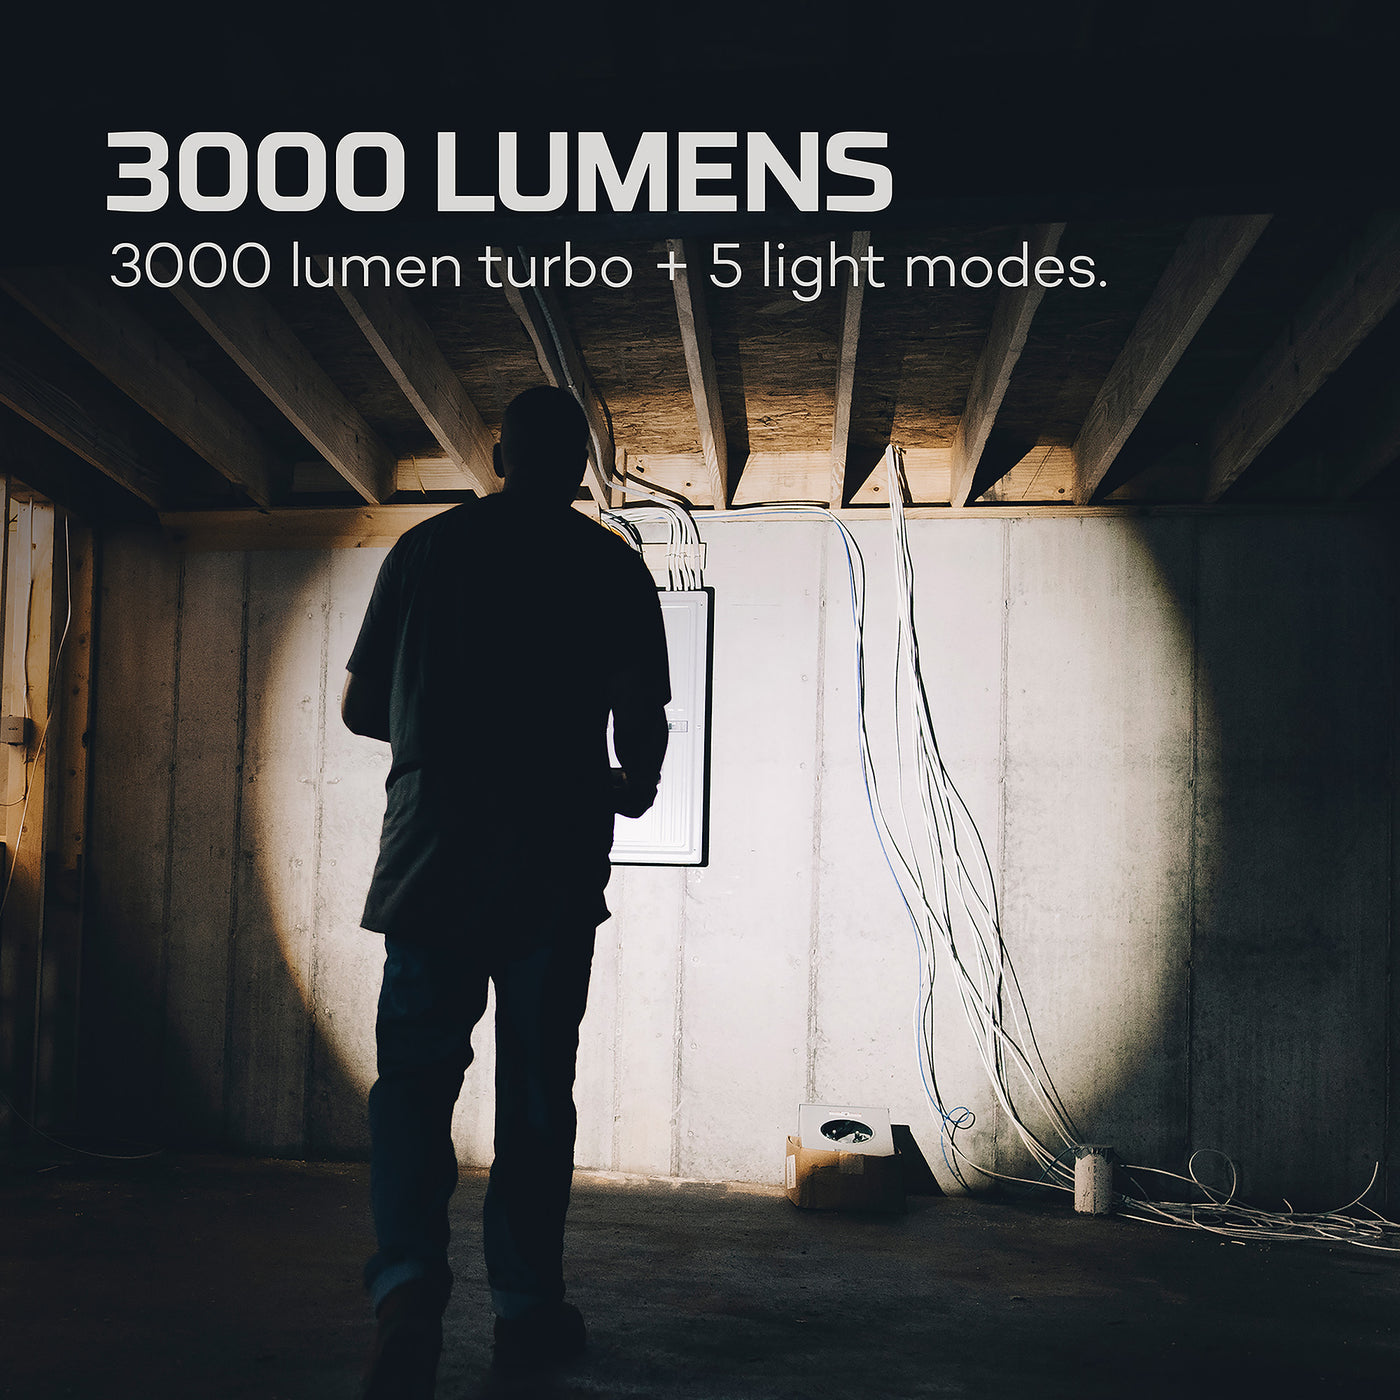 3000 lumen torch with 5 light modes